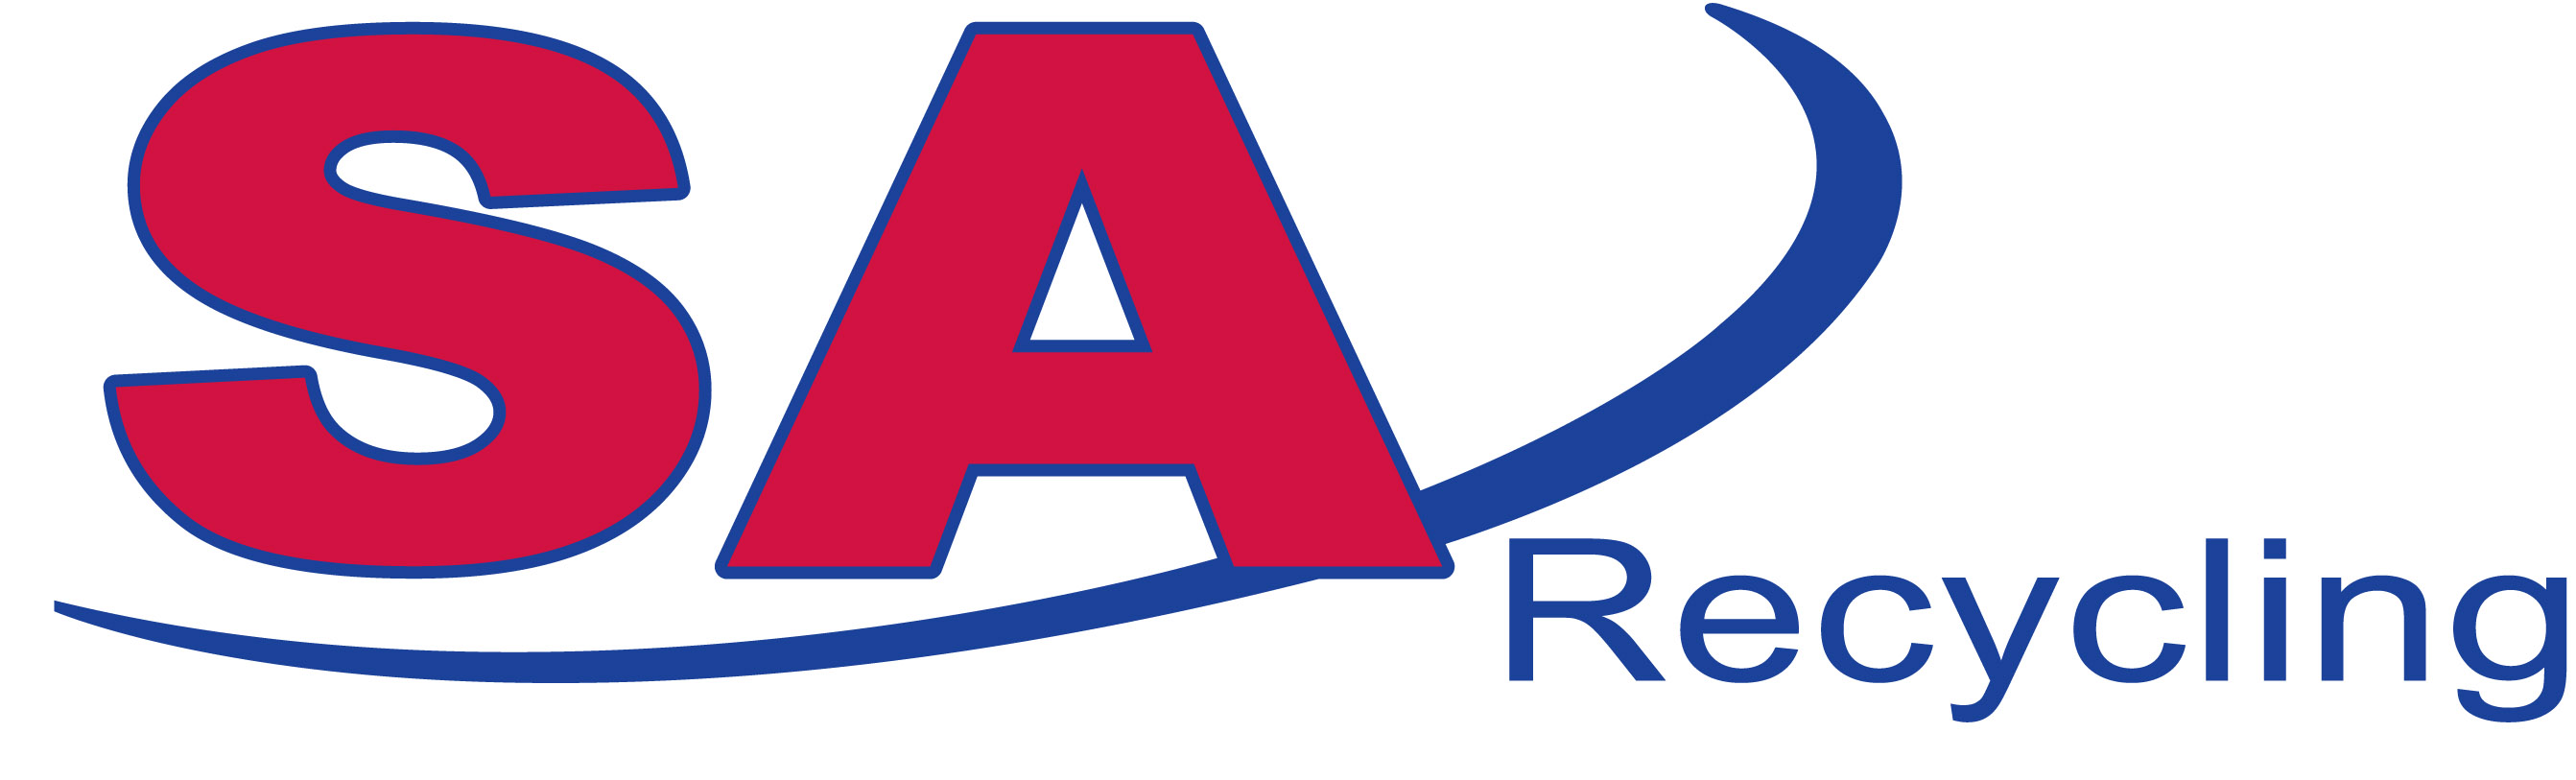 SA Recycling Logo (2-color) 3-3